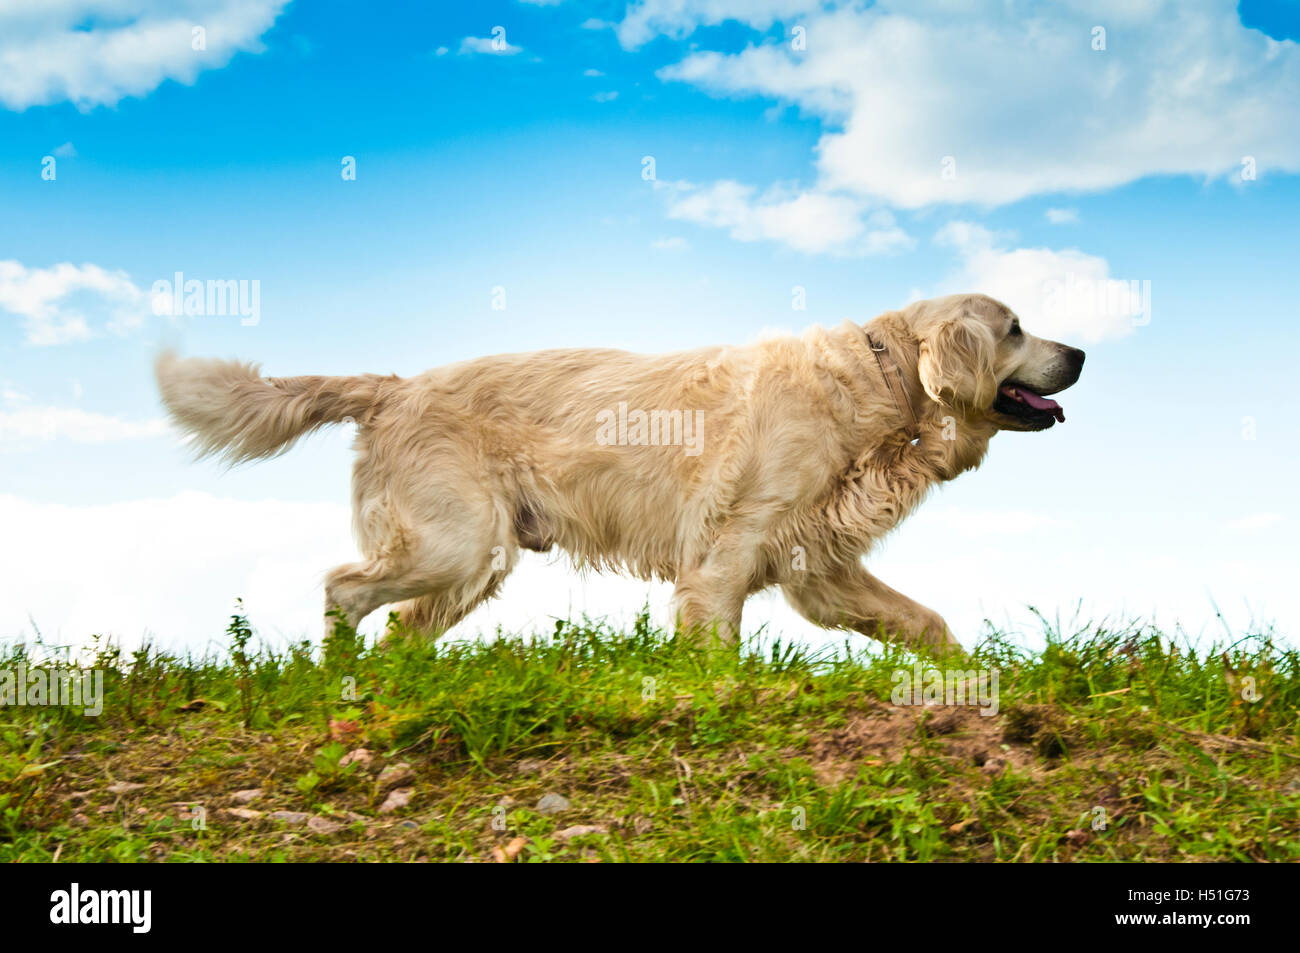 golden retriever dog walking Stock Photo